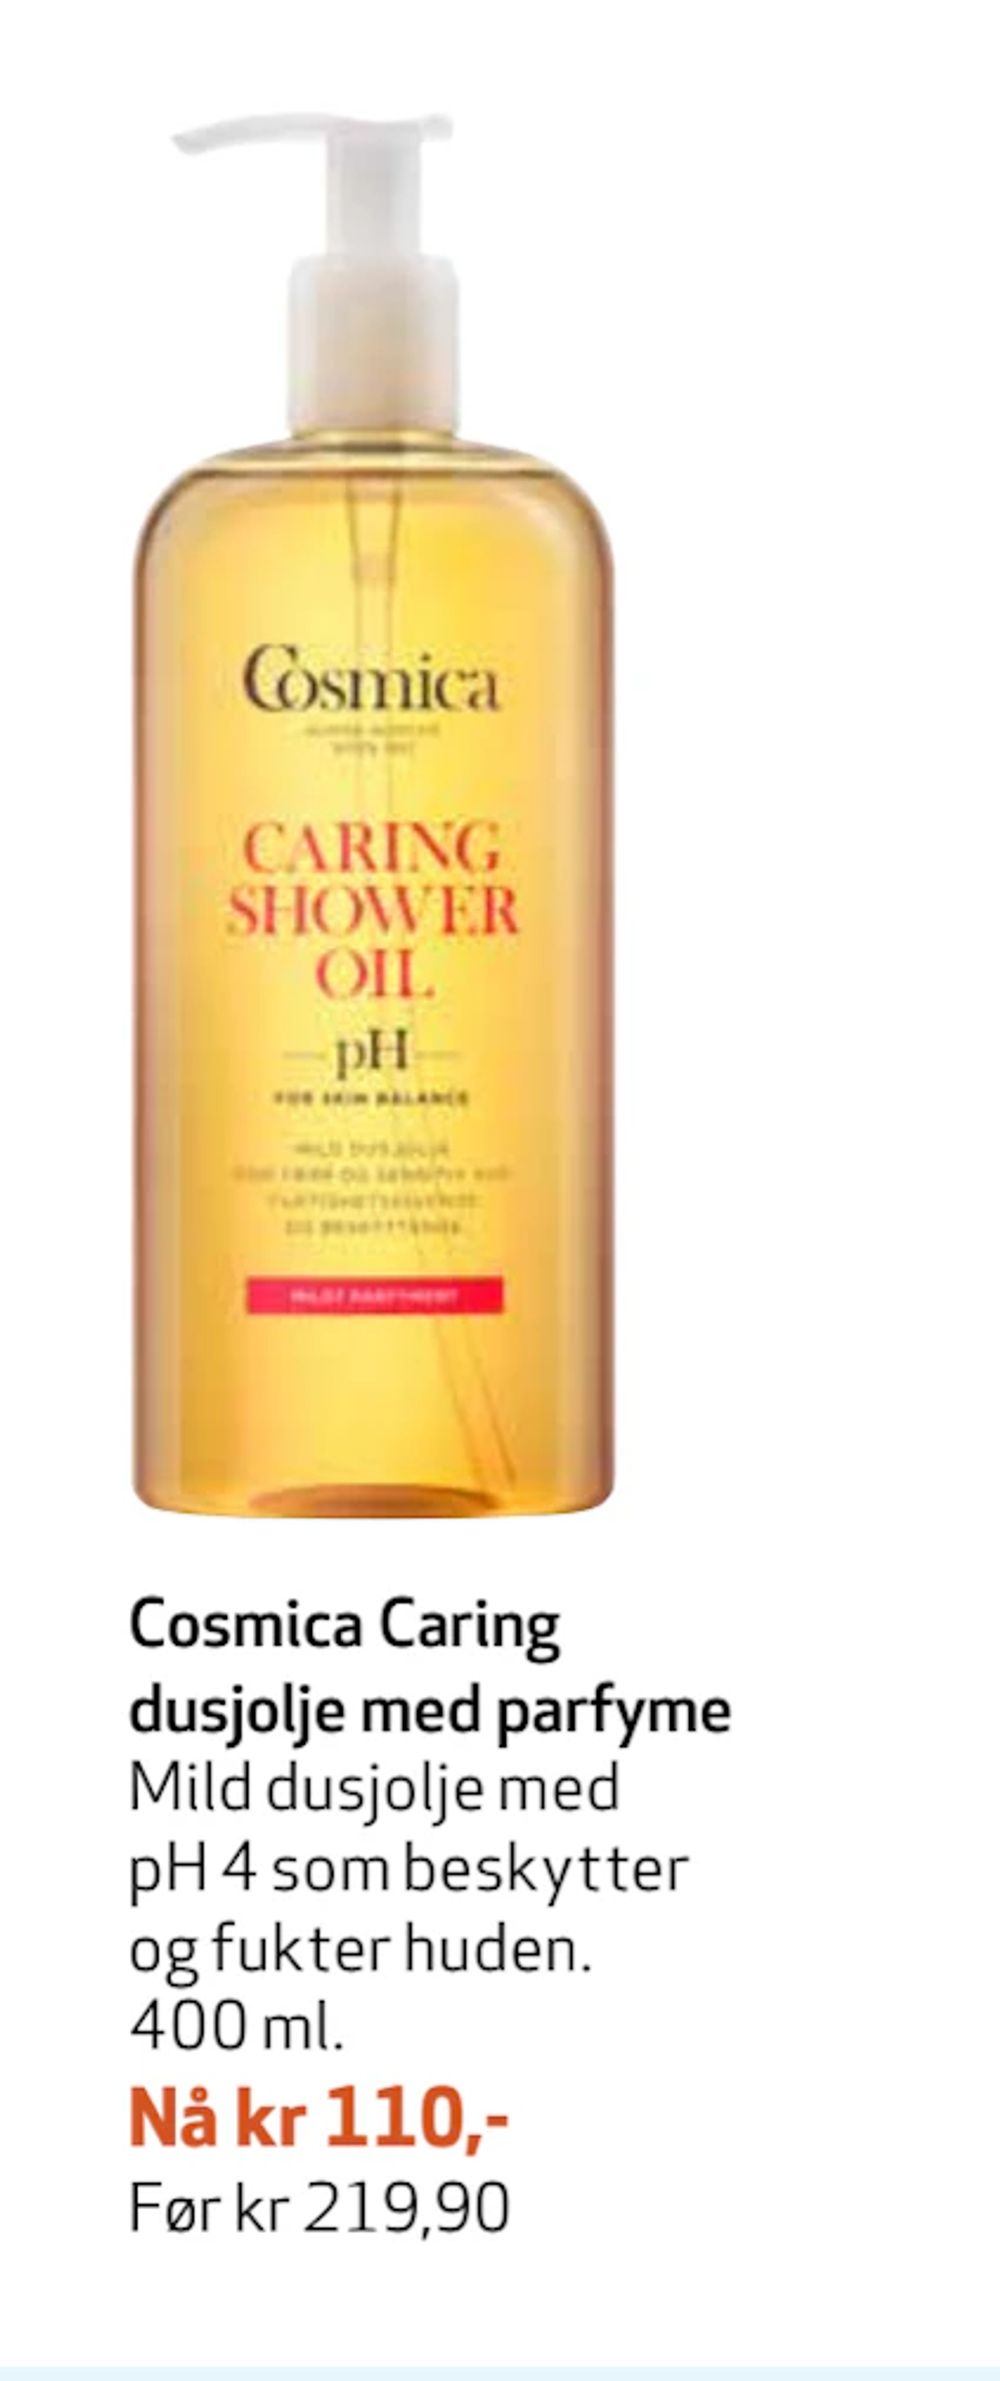 Tilbud på Cosmica Caring dusjolje med parfyme fra Apotek 1 til 110 kr